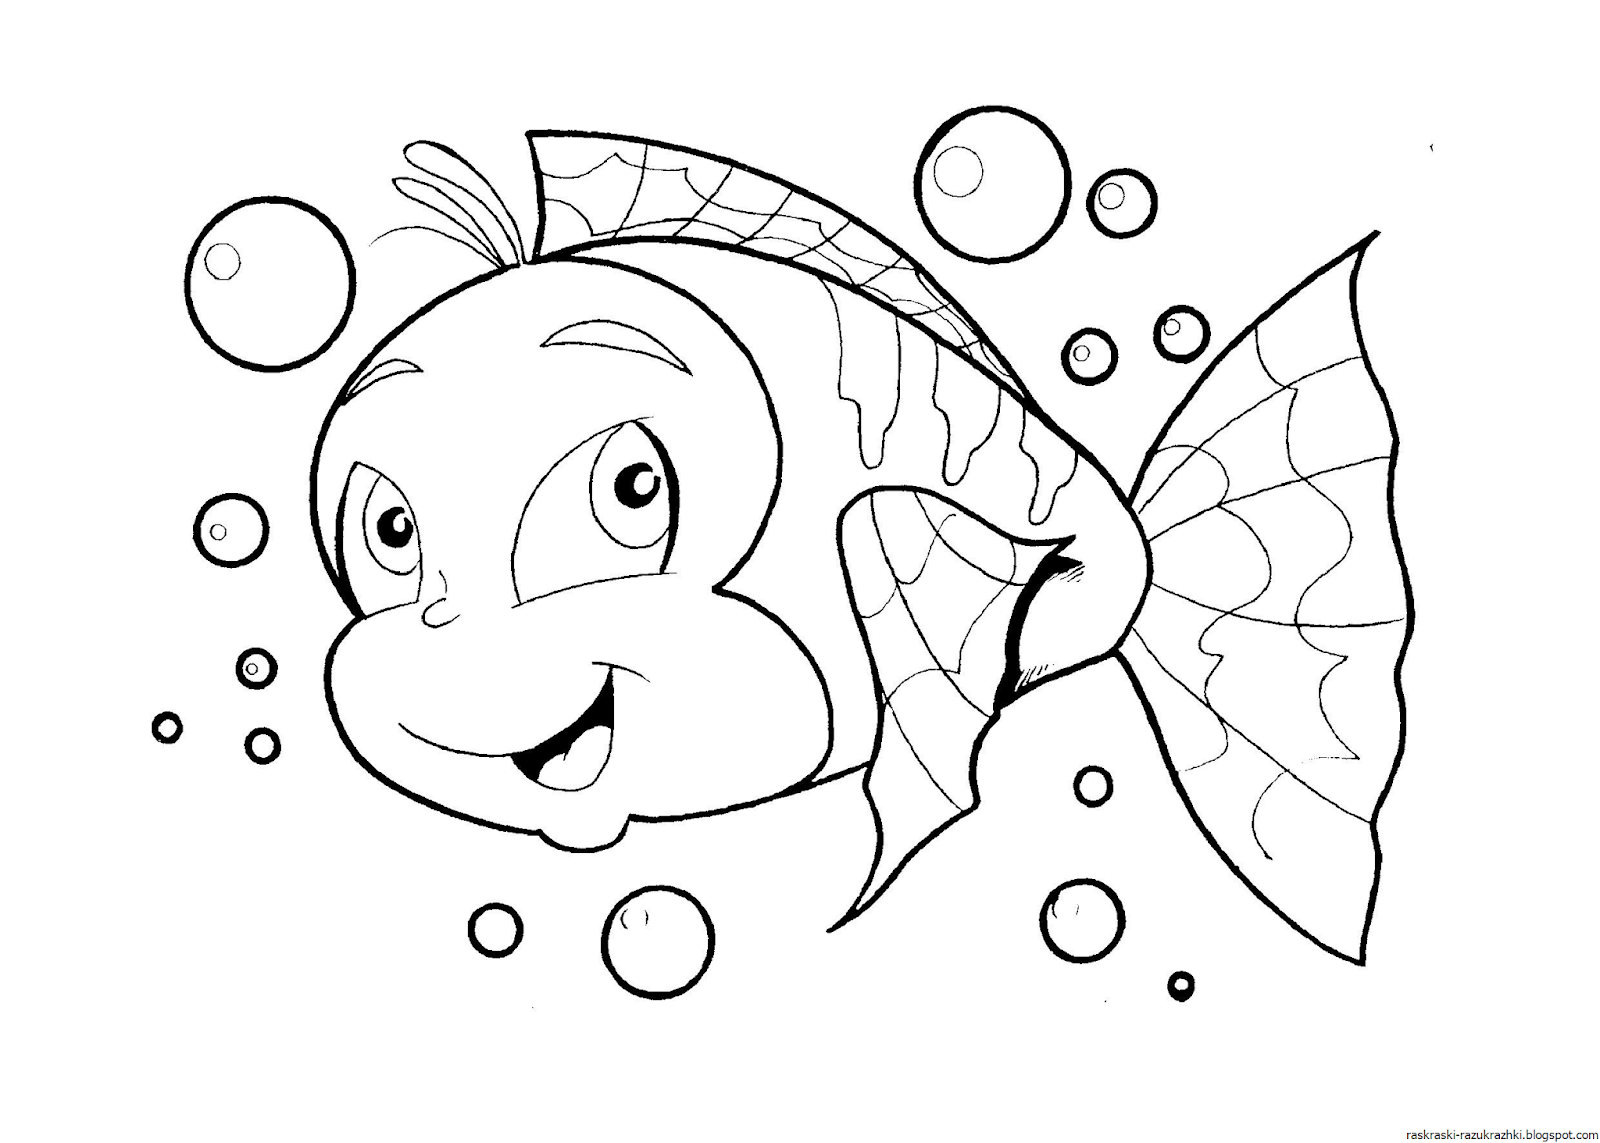 Раскраски рыбки для детей 3 4 лет. Раскраска рыбка. Рыба раскраска для детей. Рыбка раскраска для детей. Раскраски для девочек рыбки.